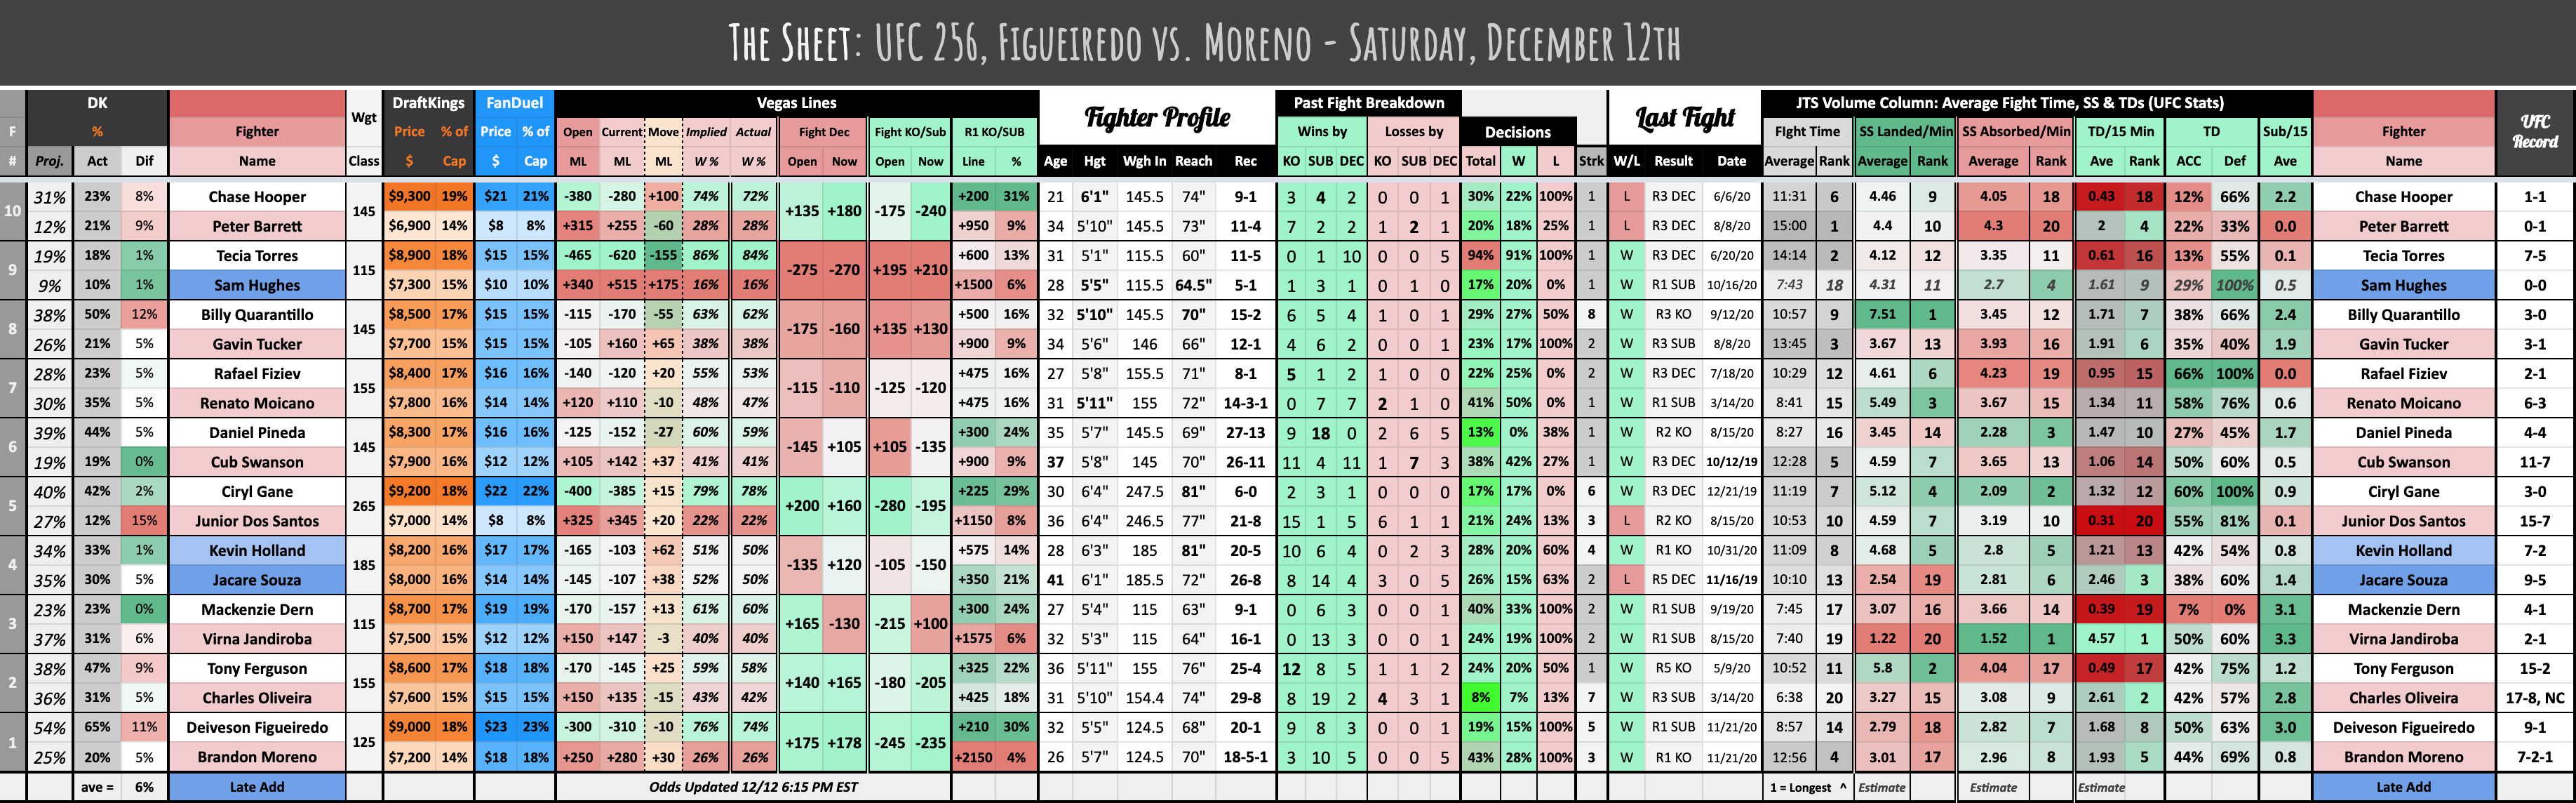 The Sheet: UFC 256, Figueiredo vs. Moreno - Saturday, December 12th